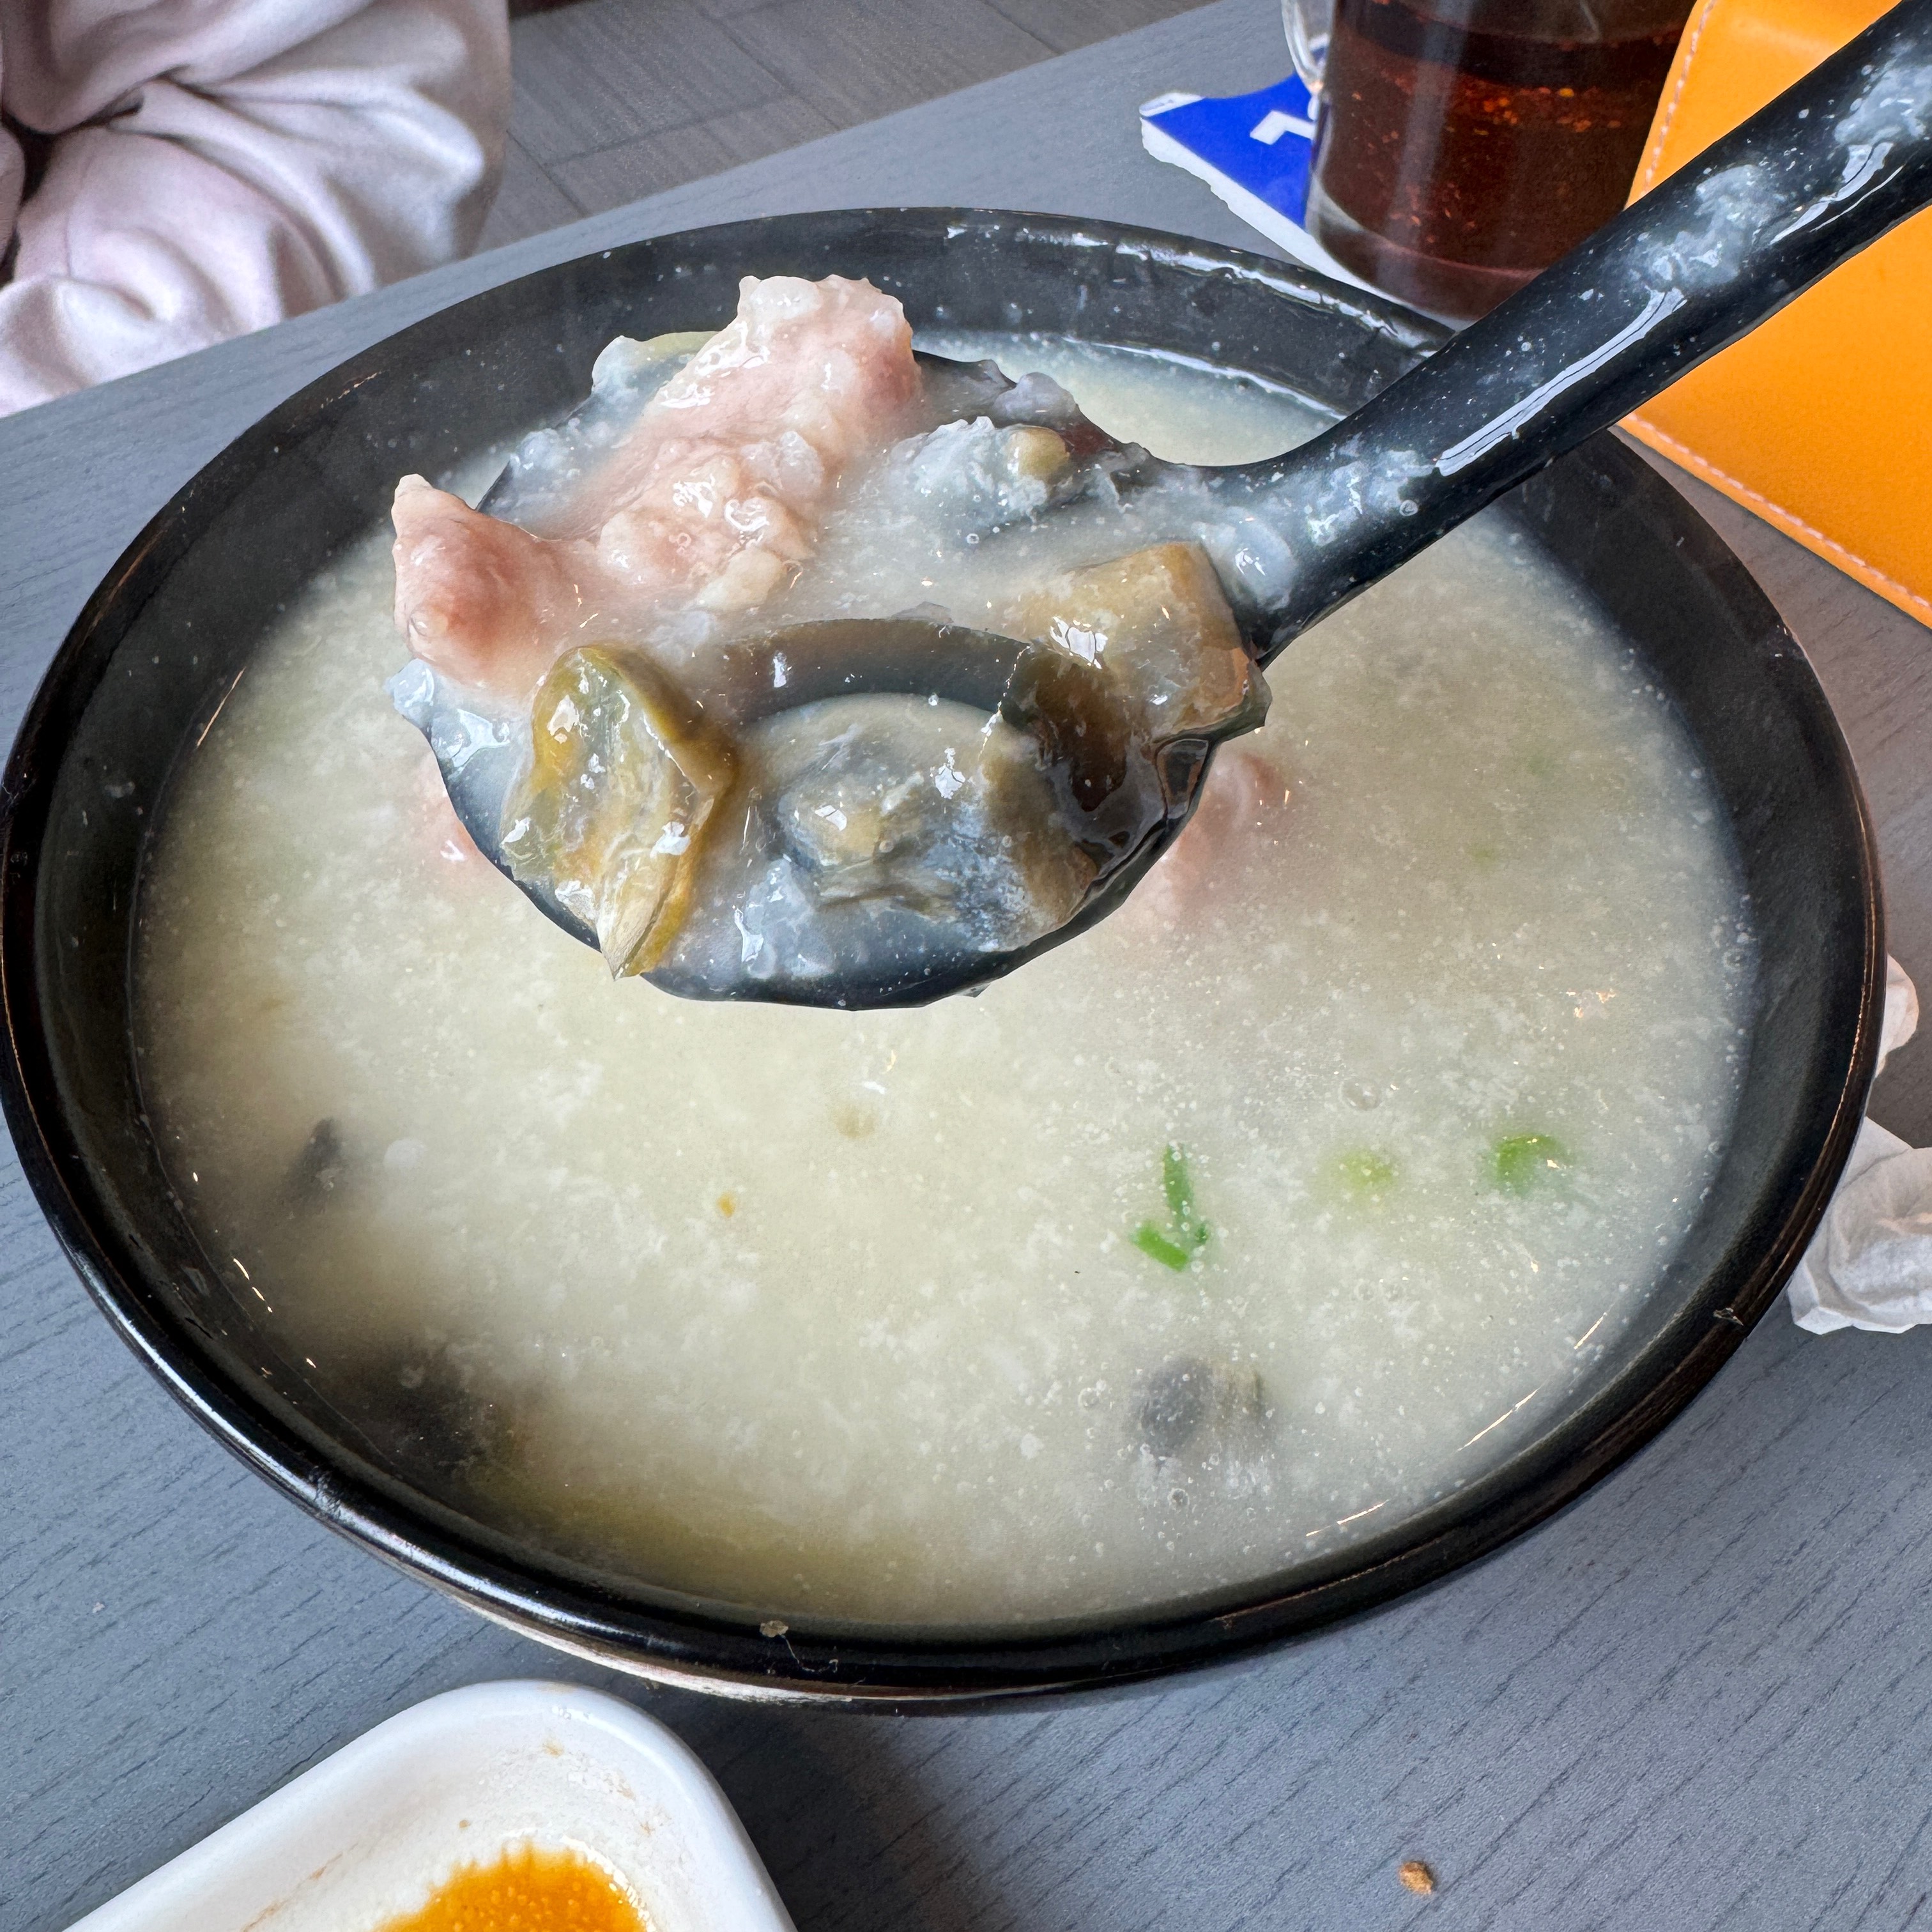 Pork & Preserved Egg Porridge Congee $8.50 at Mr. Champion (冠軍) on #foodmento http://foodmento.com/place/13023